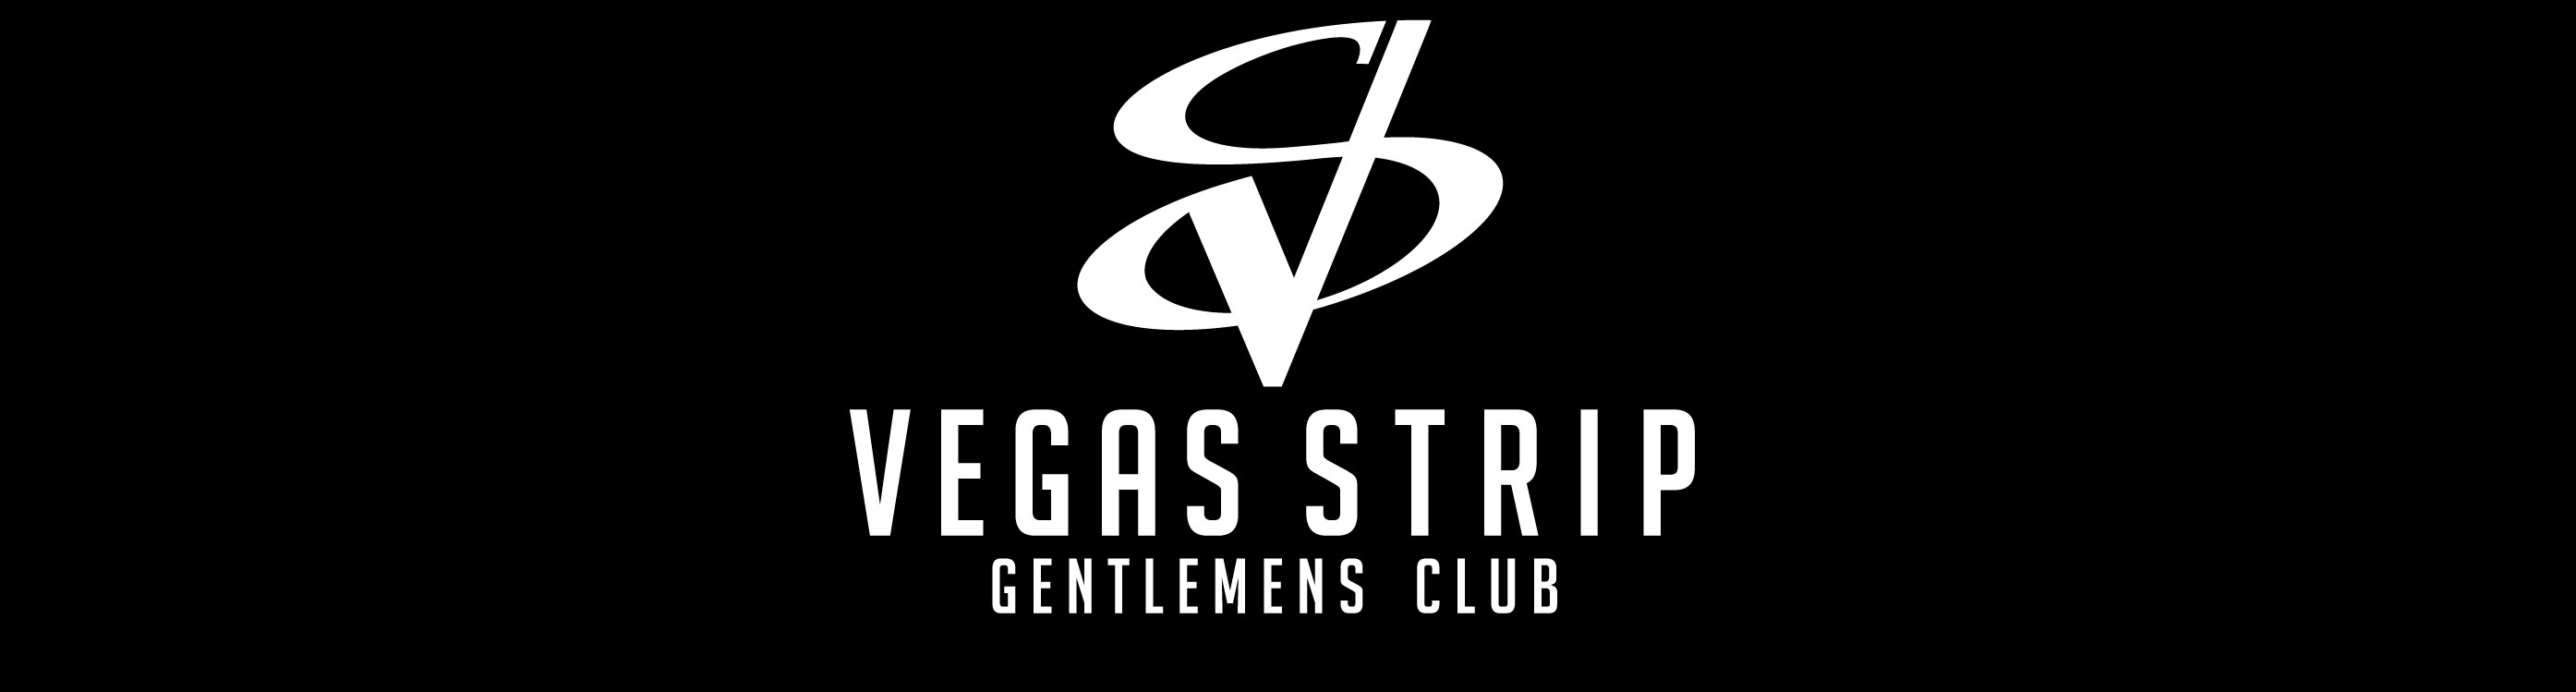 Vegas Strip Gentlemen's Club💕💕💕TOPLESS STRIP CLUB